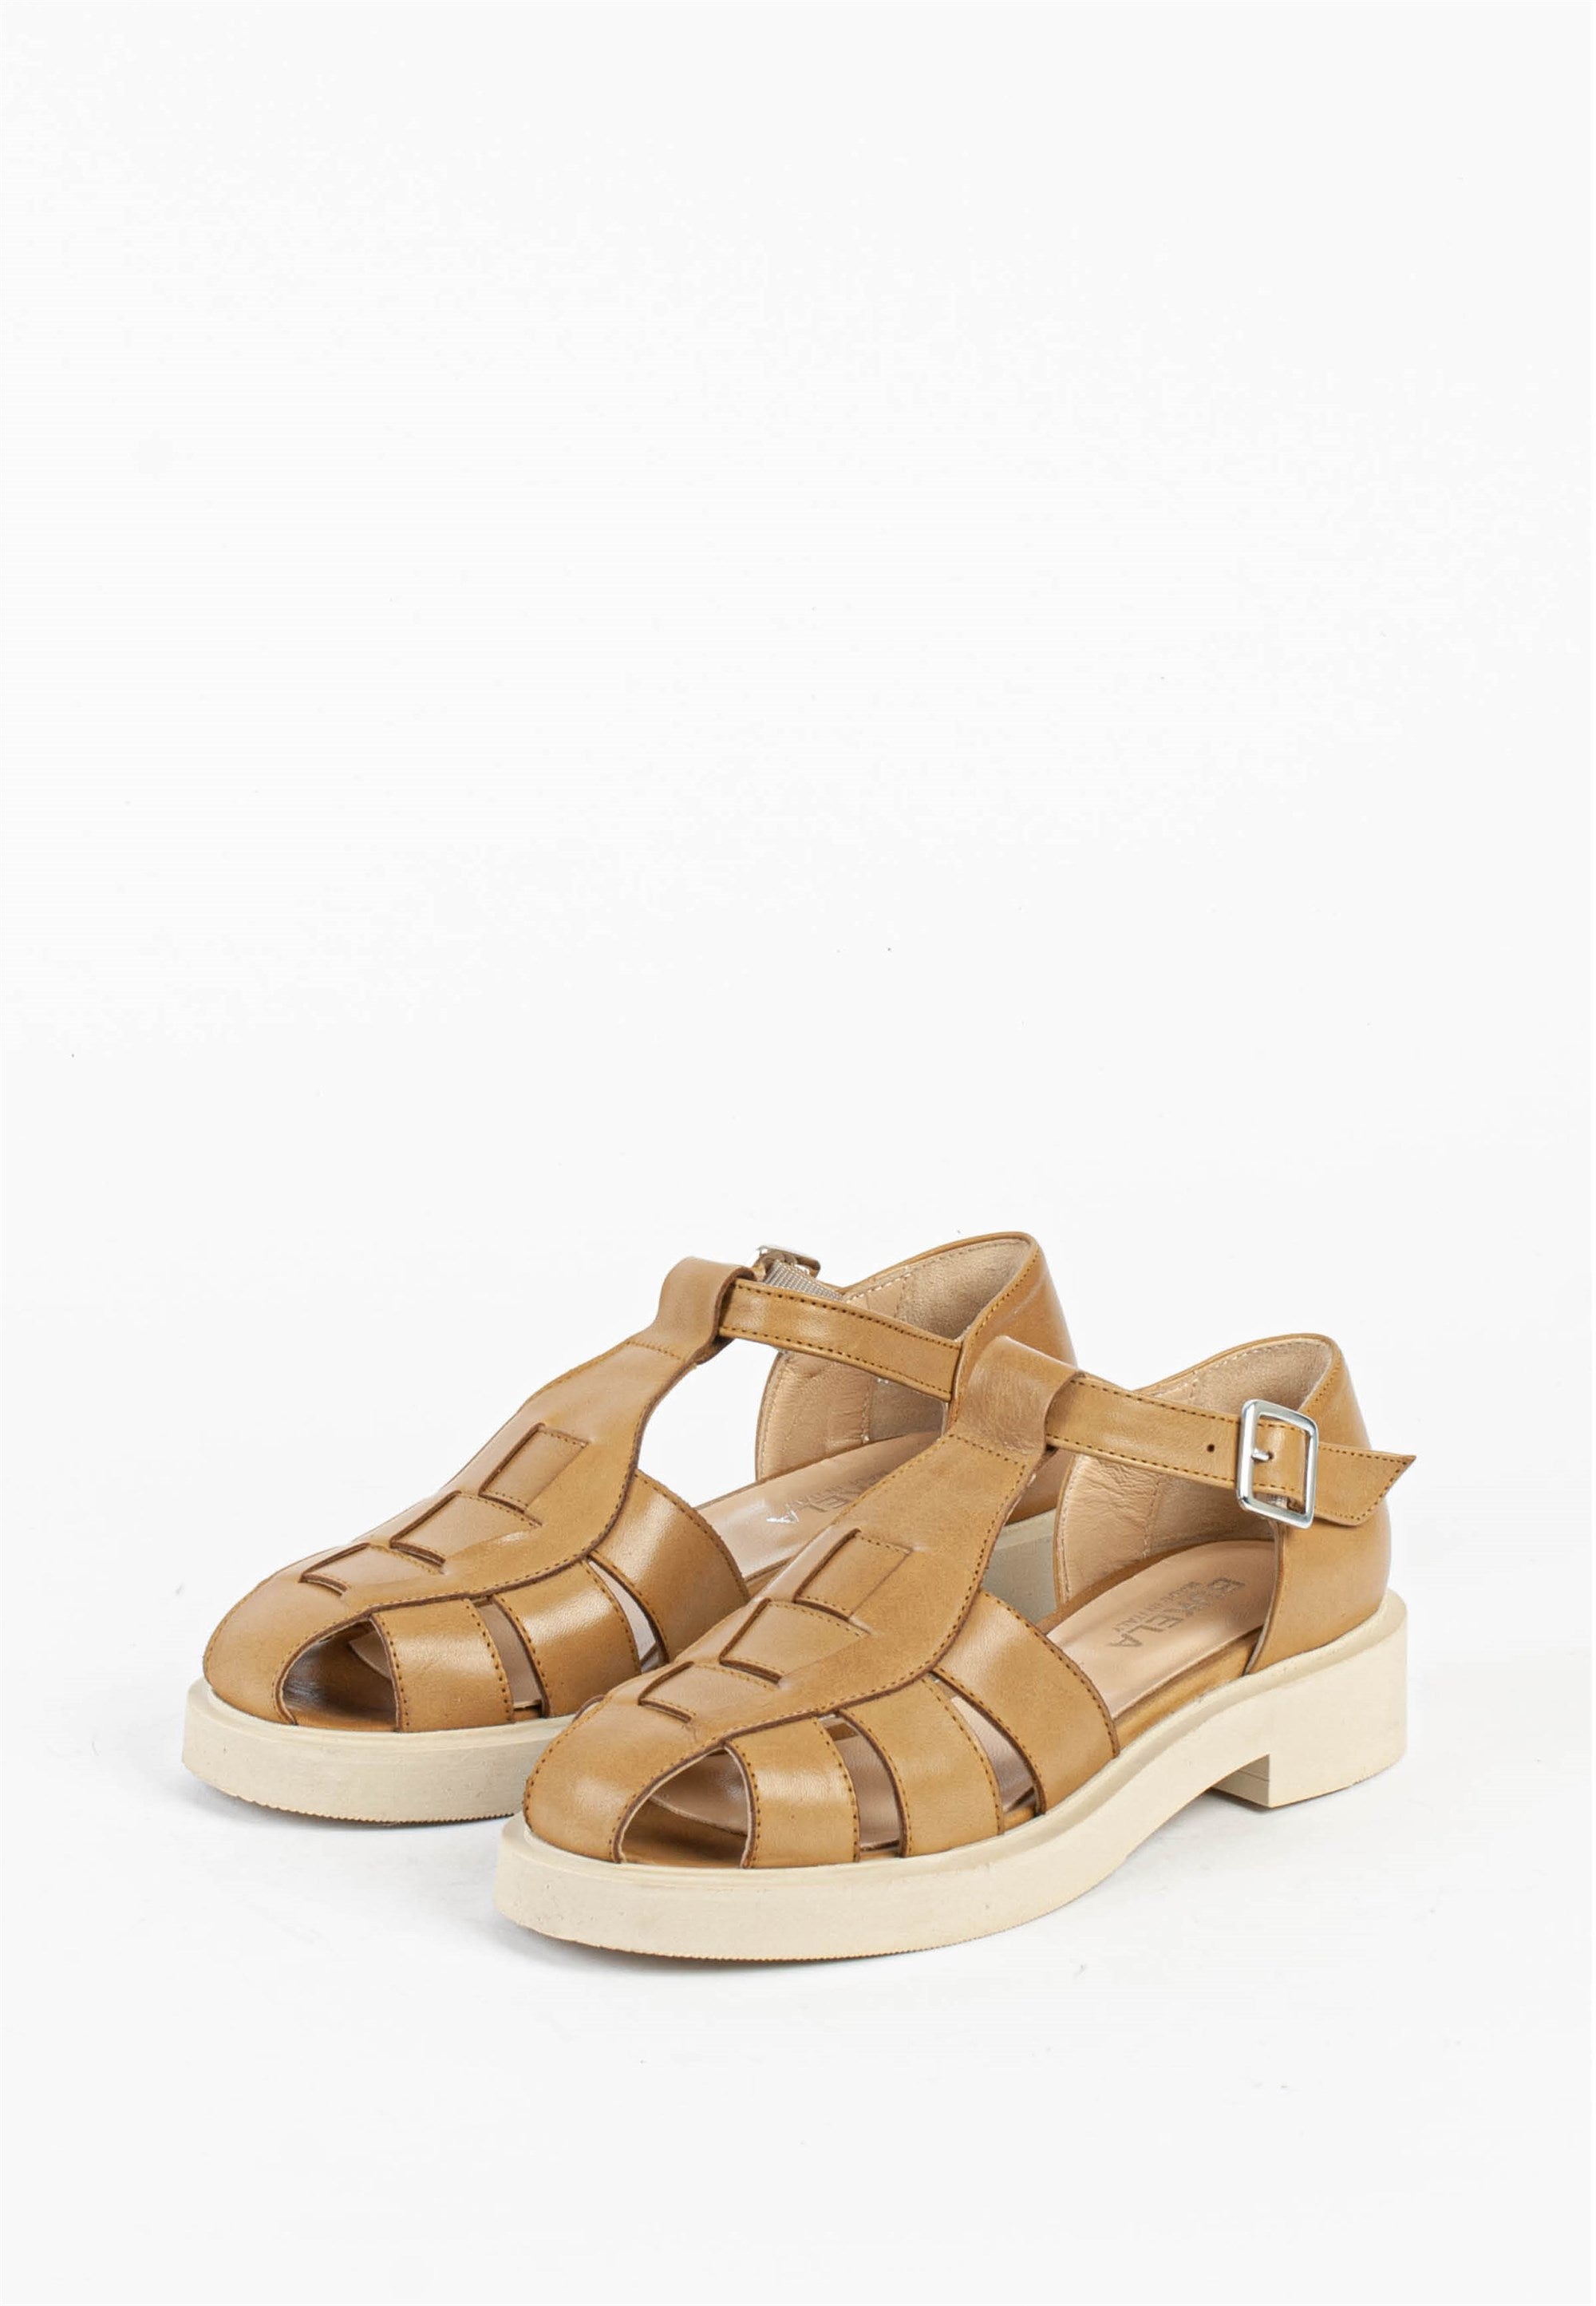 Clara Camel Leather Sandals CLARA-CAMEL - 7